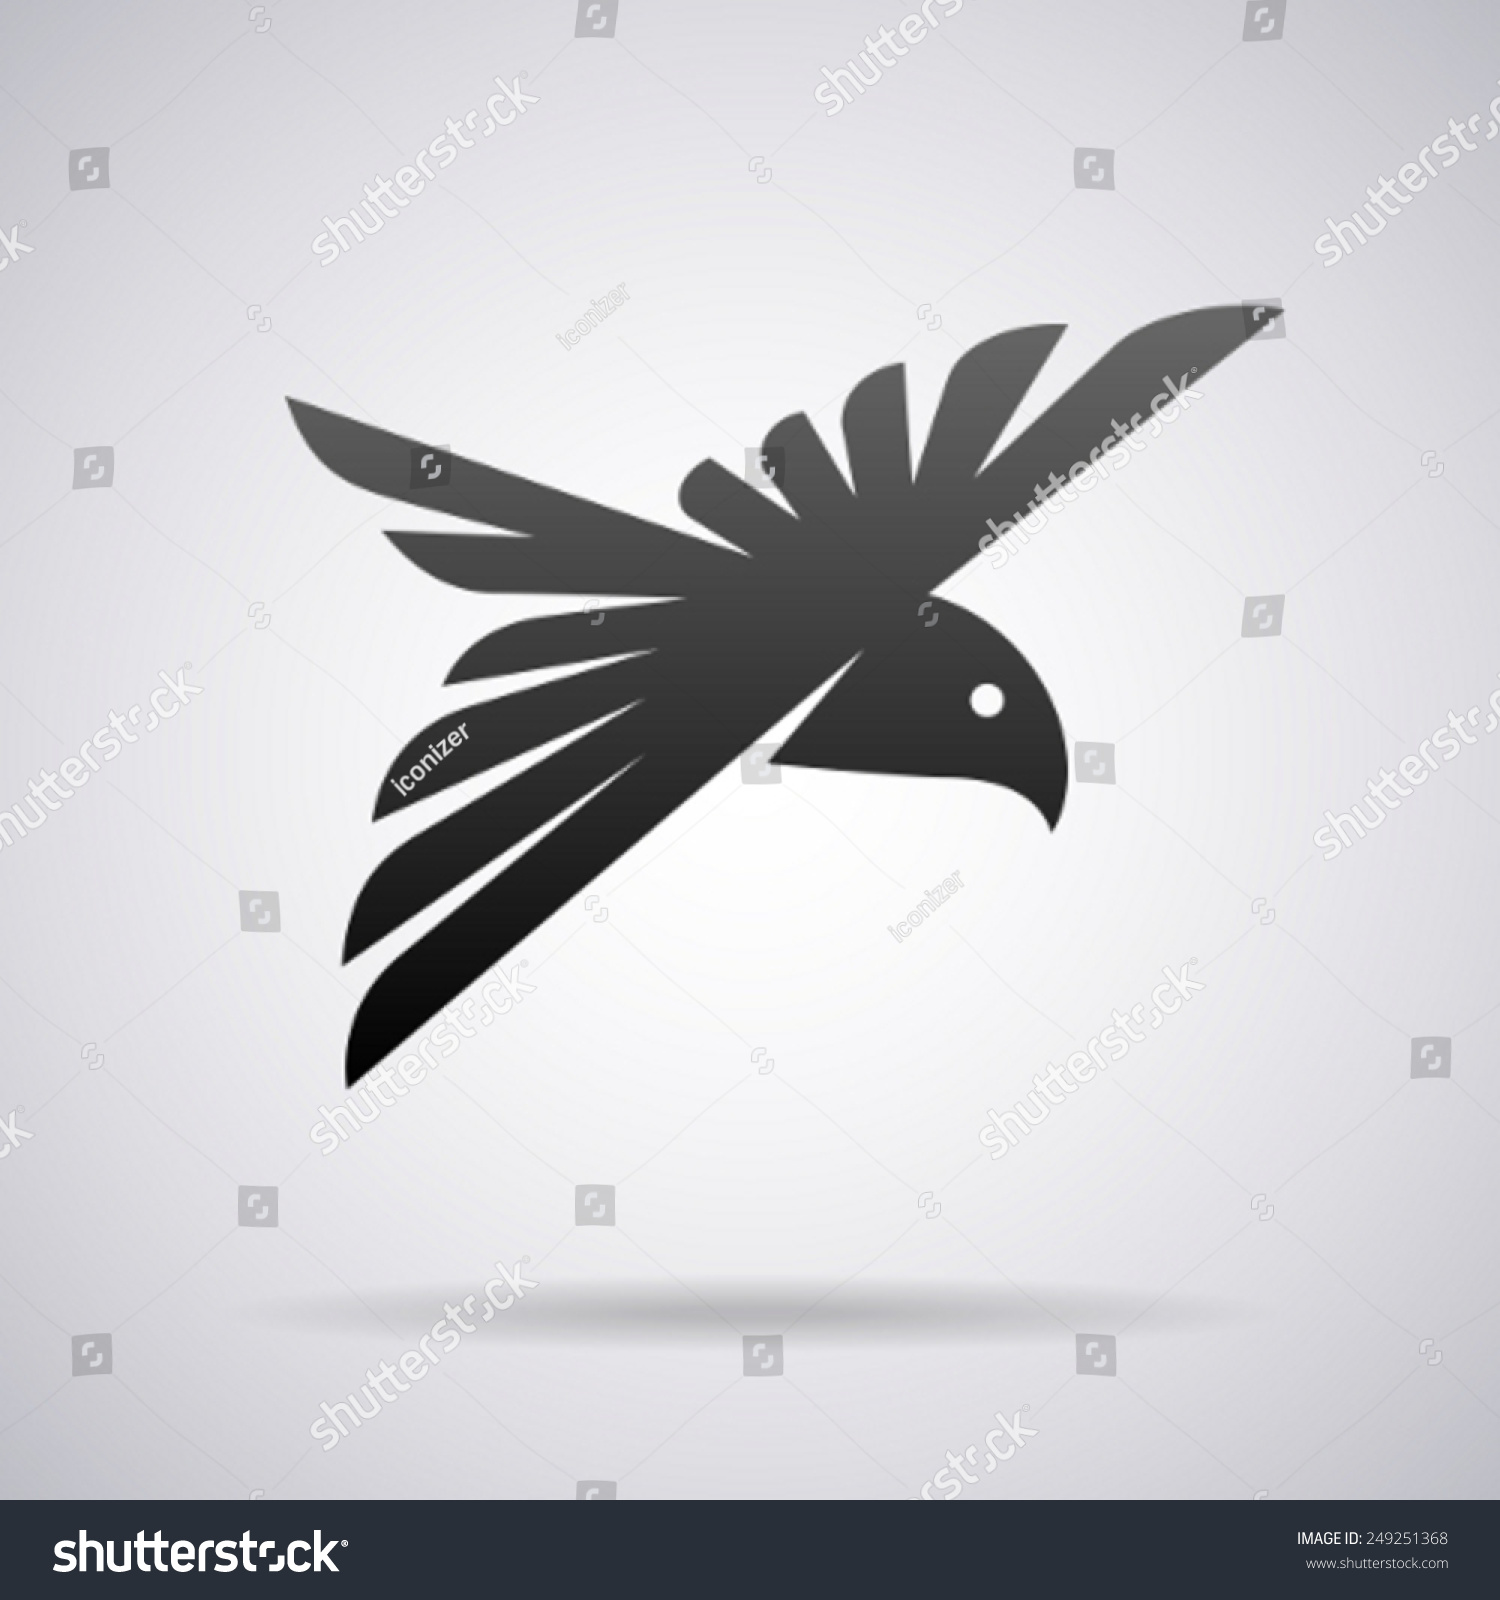 Flying Bird Vector Logo Design Template - 249251368 : Shutterstock